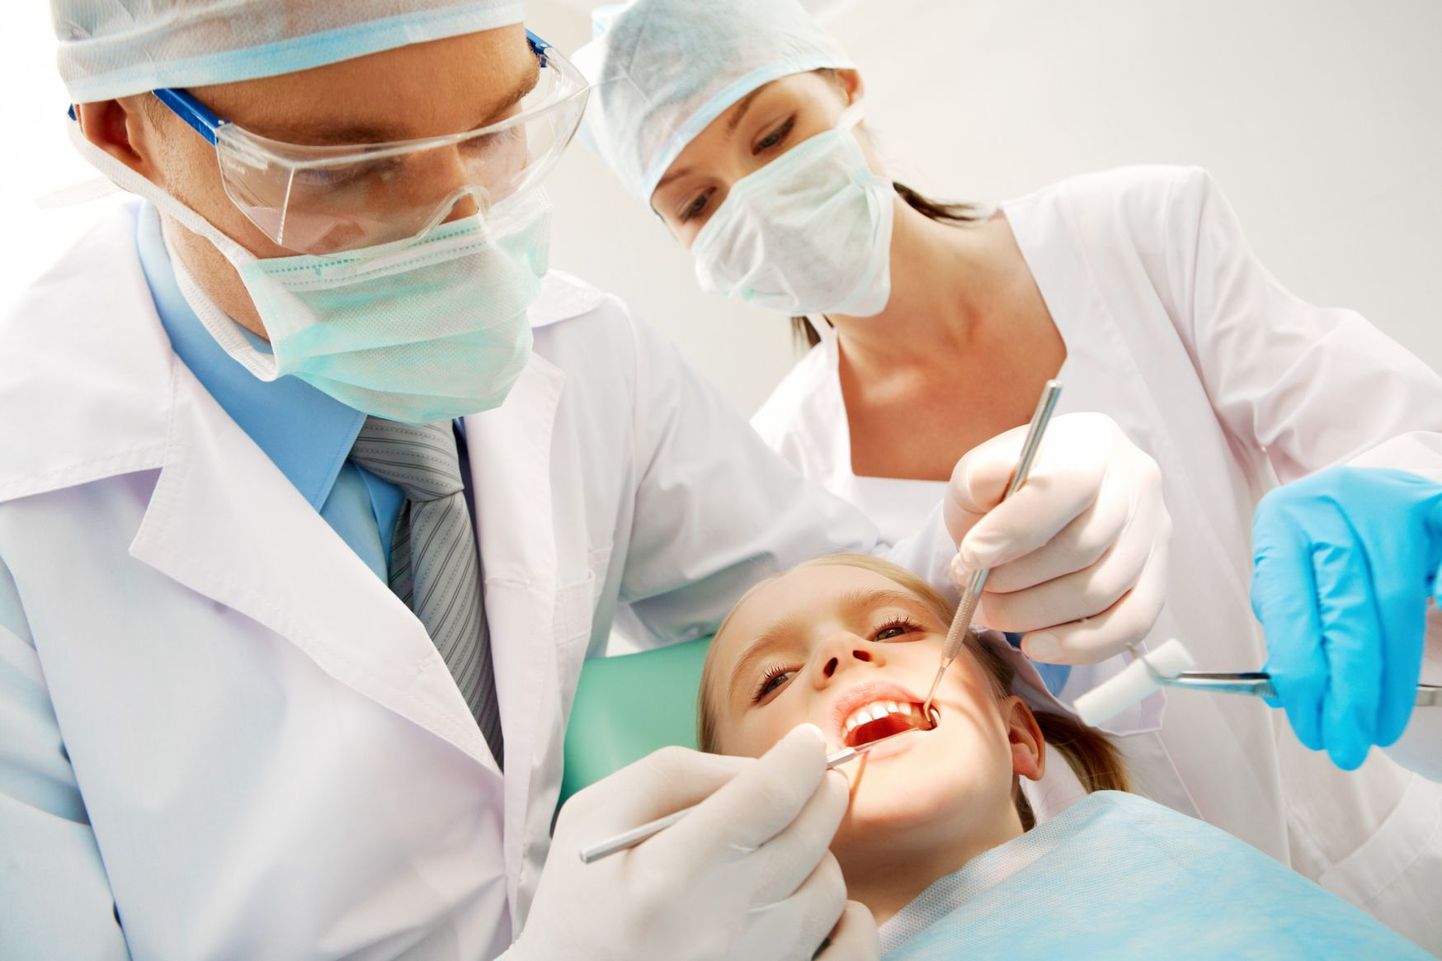 Ребенок на приеме у зубного врача. Иллюстративное фото.